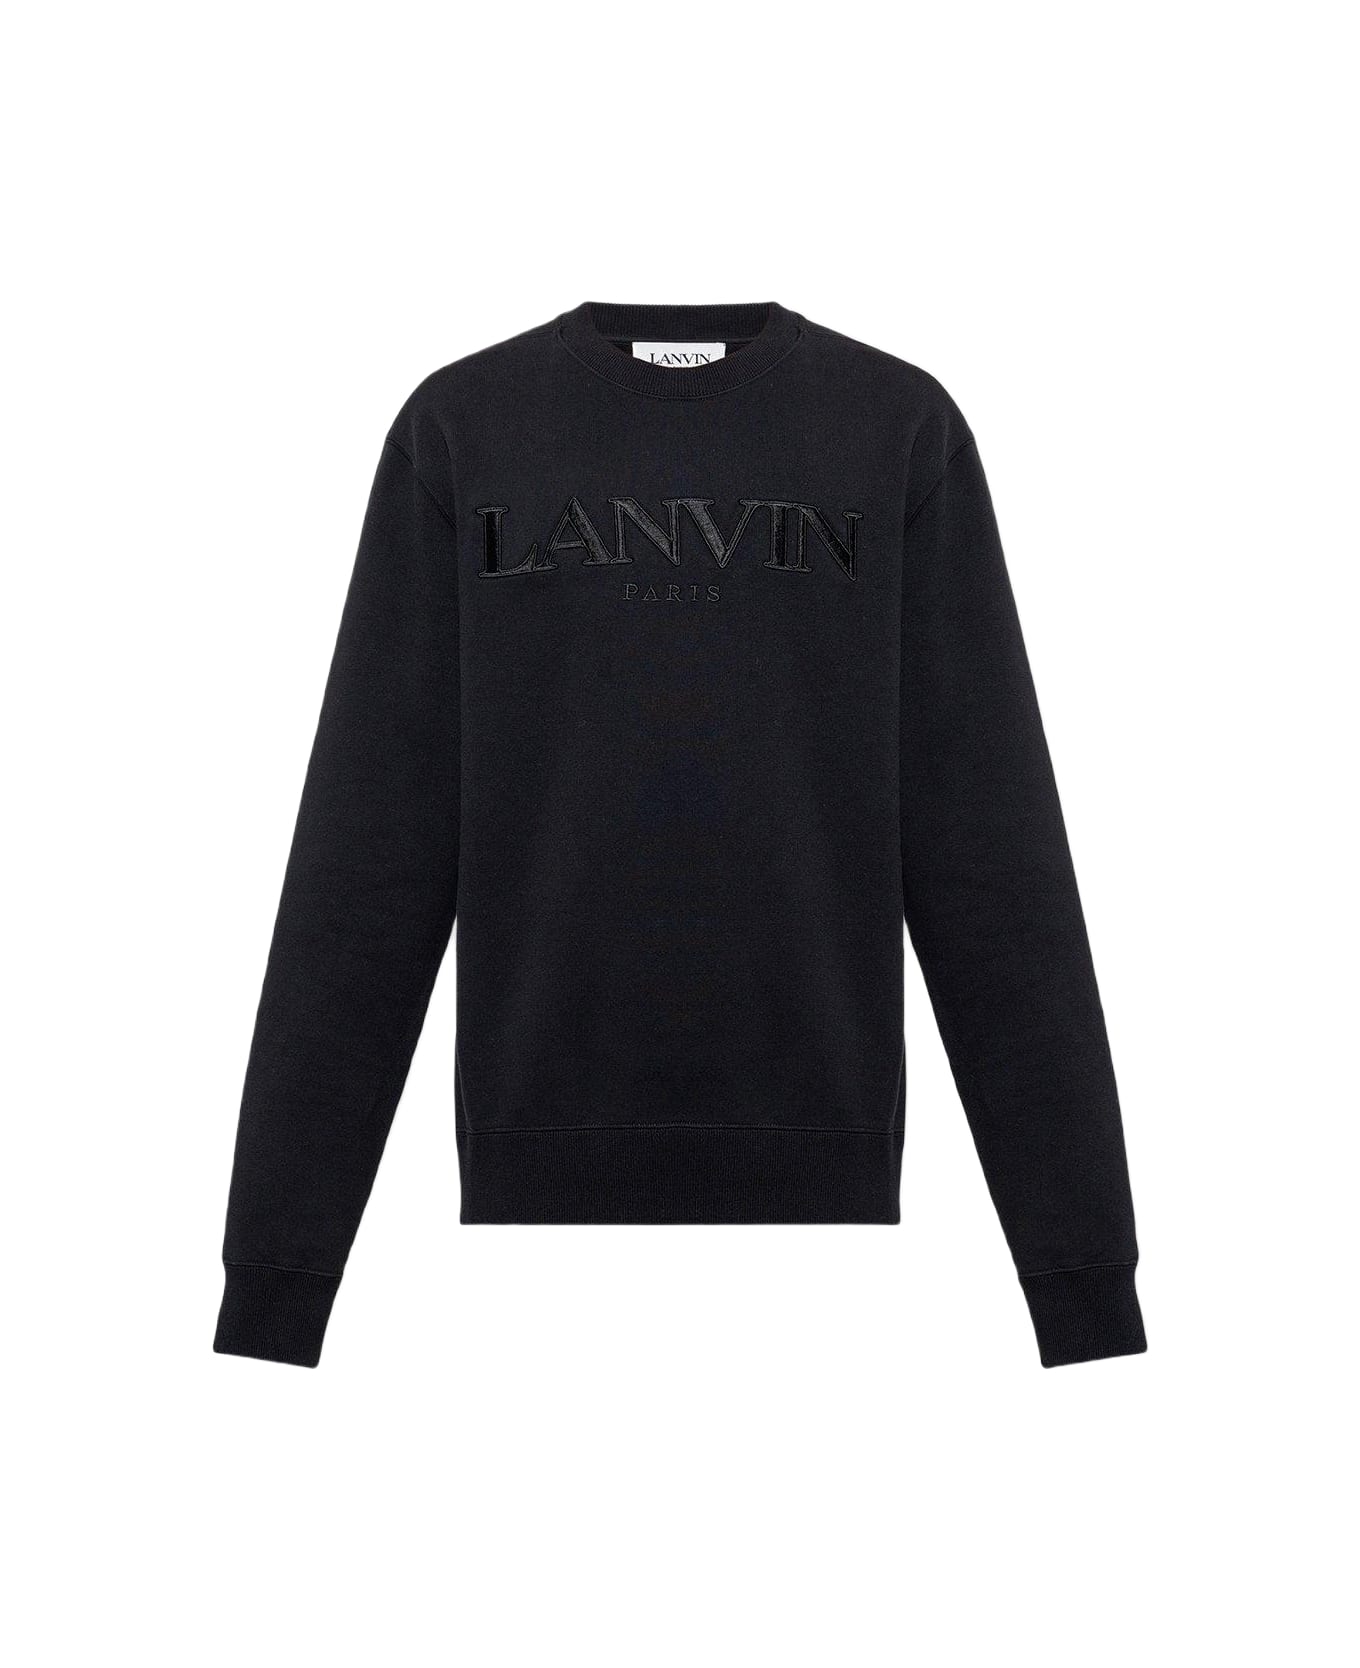 Lanvin Logo Embroidered Crewneck Sweatshirt - Black